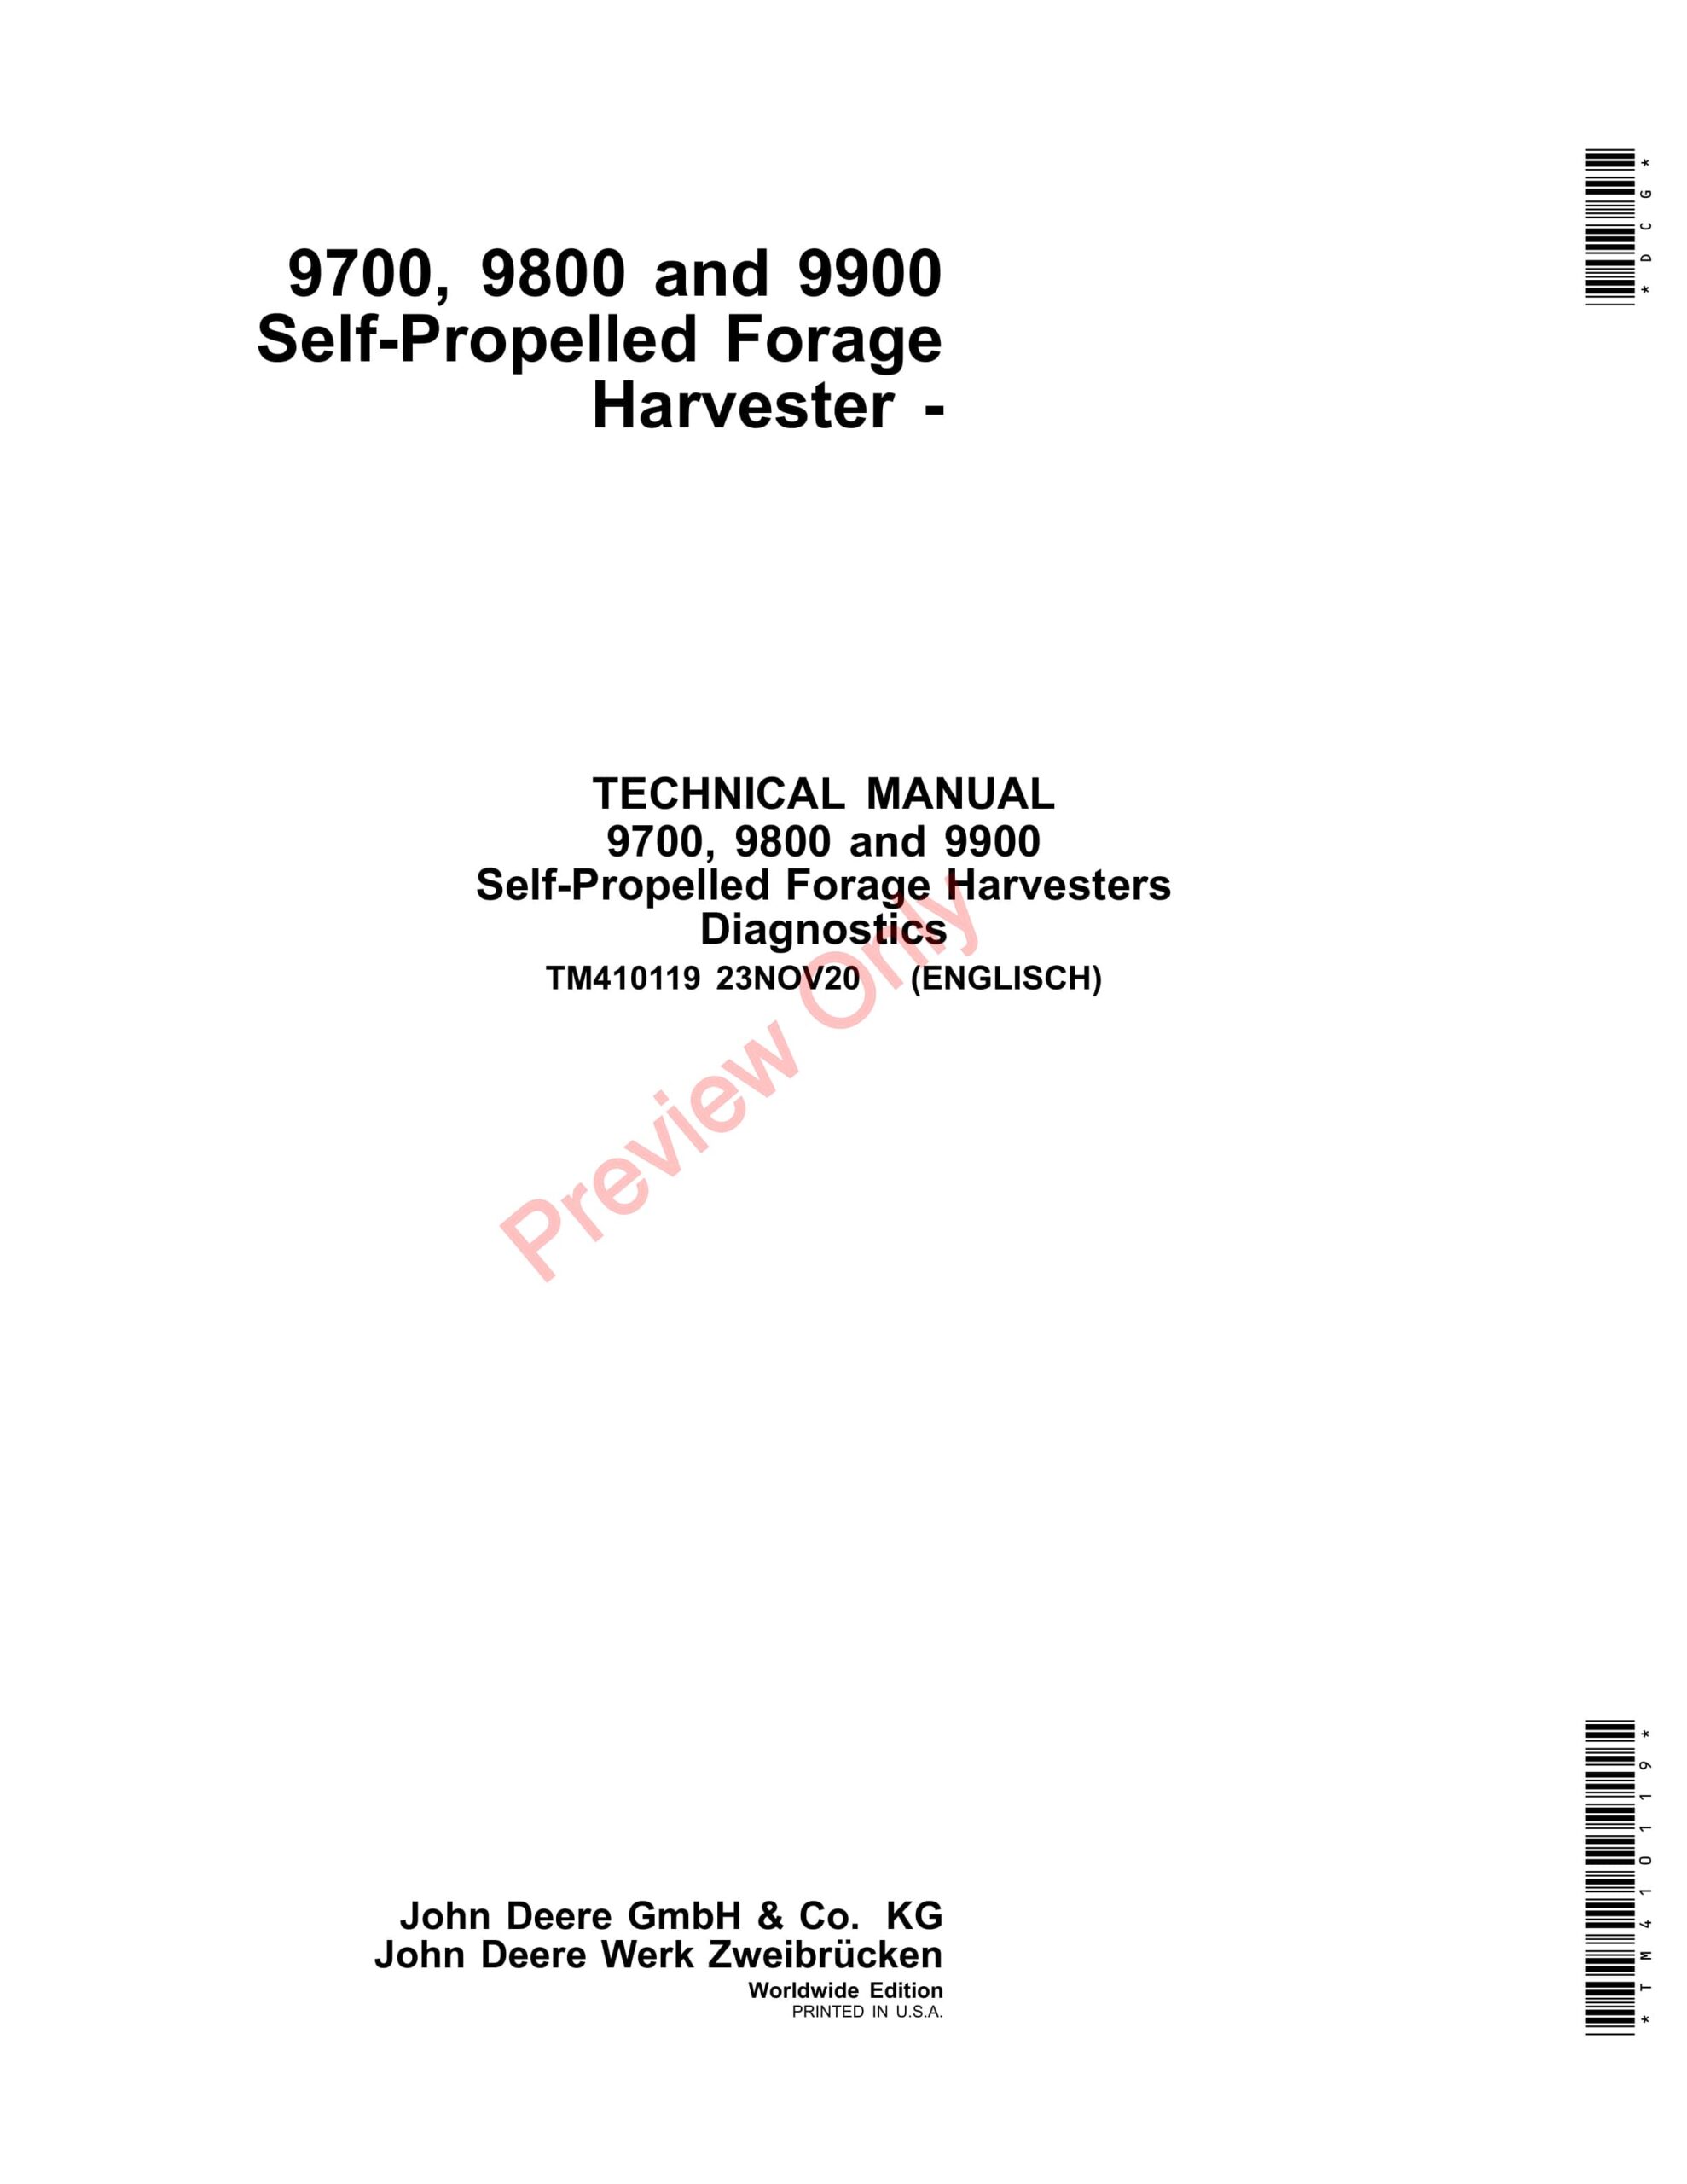 John Deere 9700, 9800 and 9900 Self-Propelled Forage Harvester Technical Manual TM410119 23NOV20-1